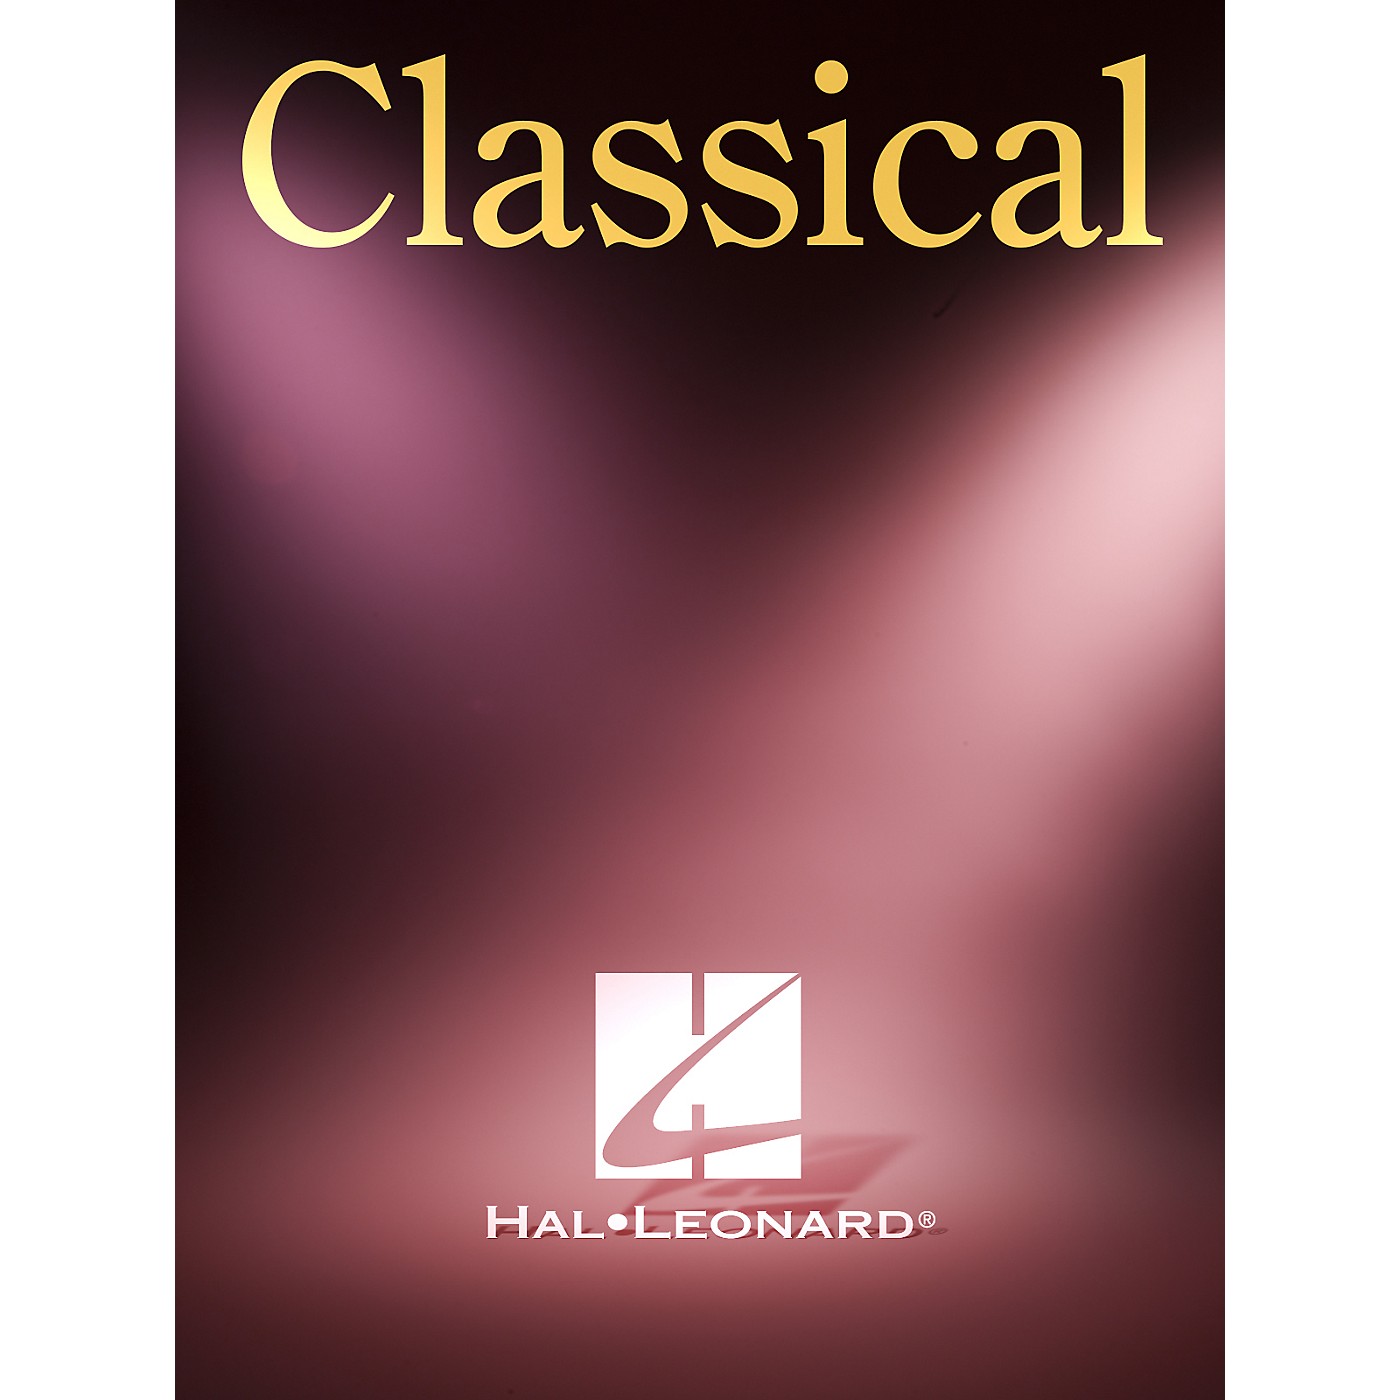 Hal Leonard Fantasia Op. 7 (chiesa) Suvini Zerboni Series thumbnail